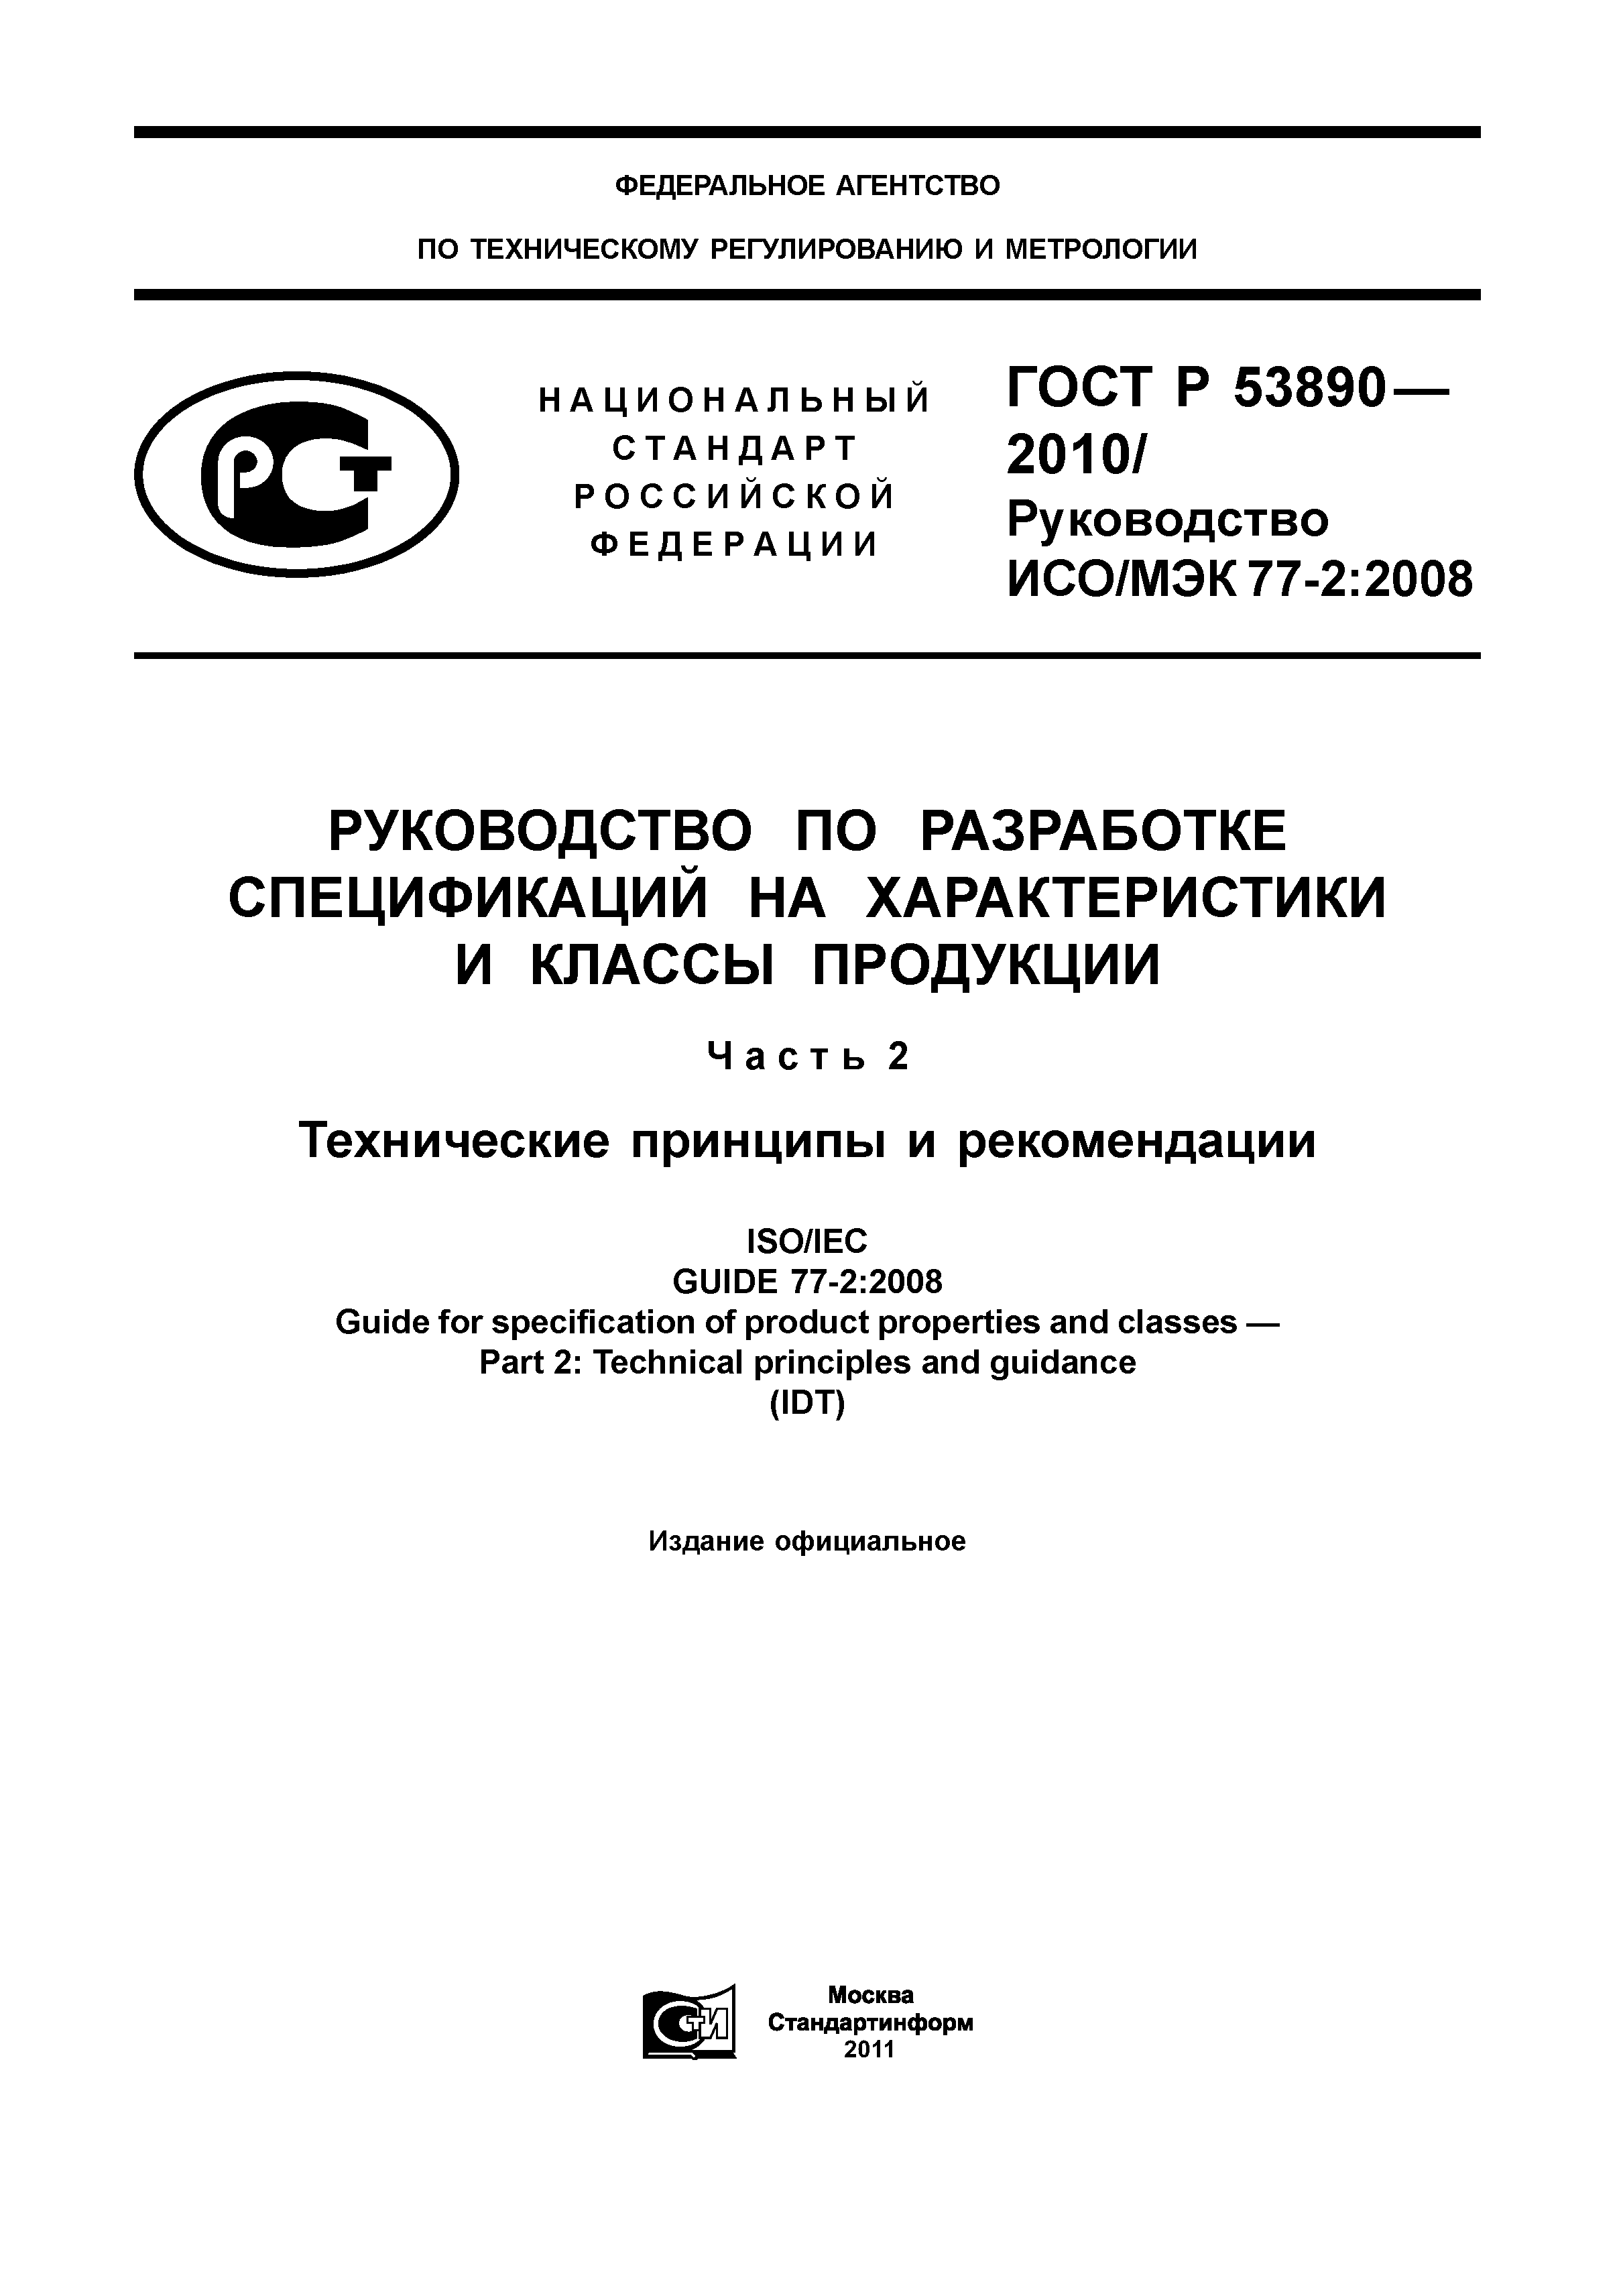 ГОСТ Р 53890-2010